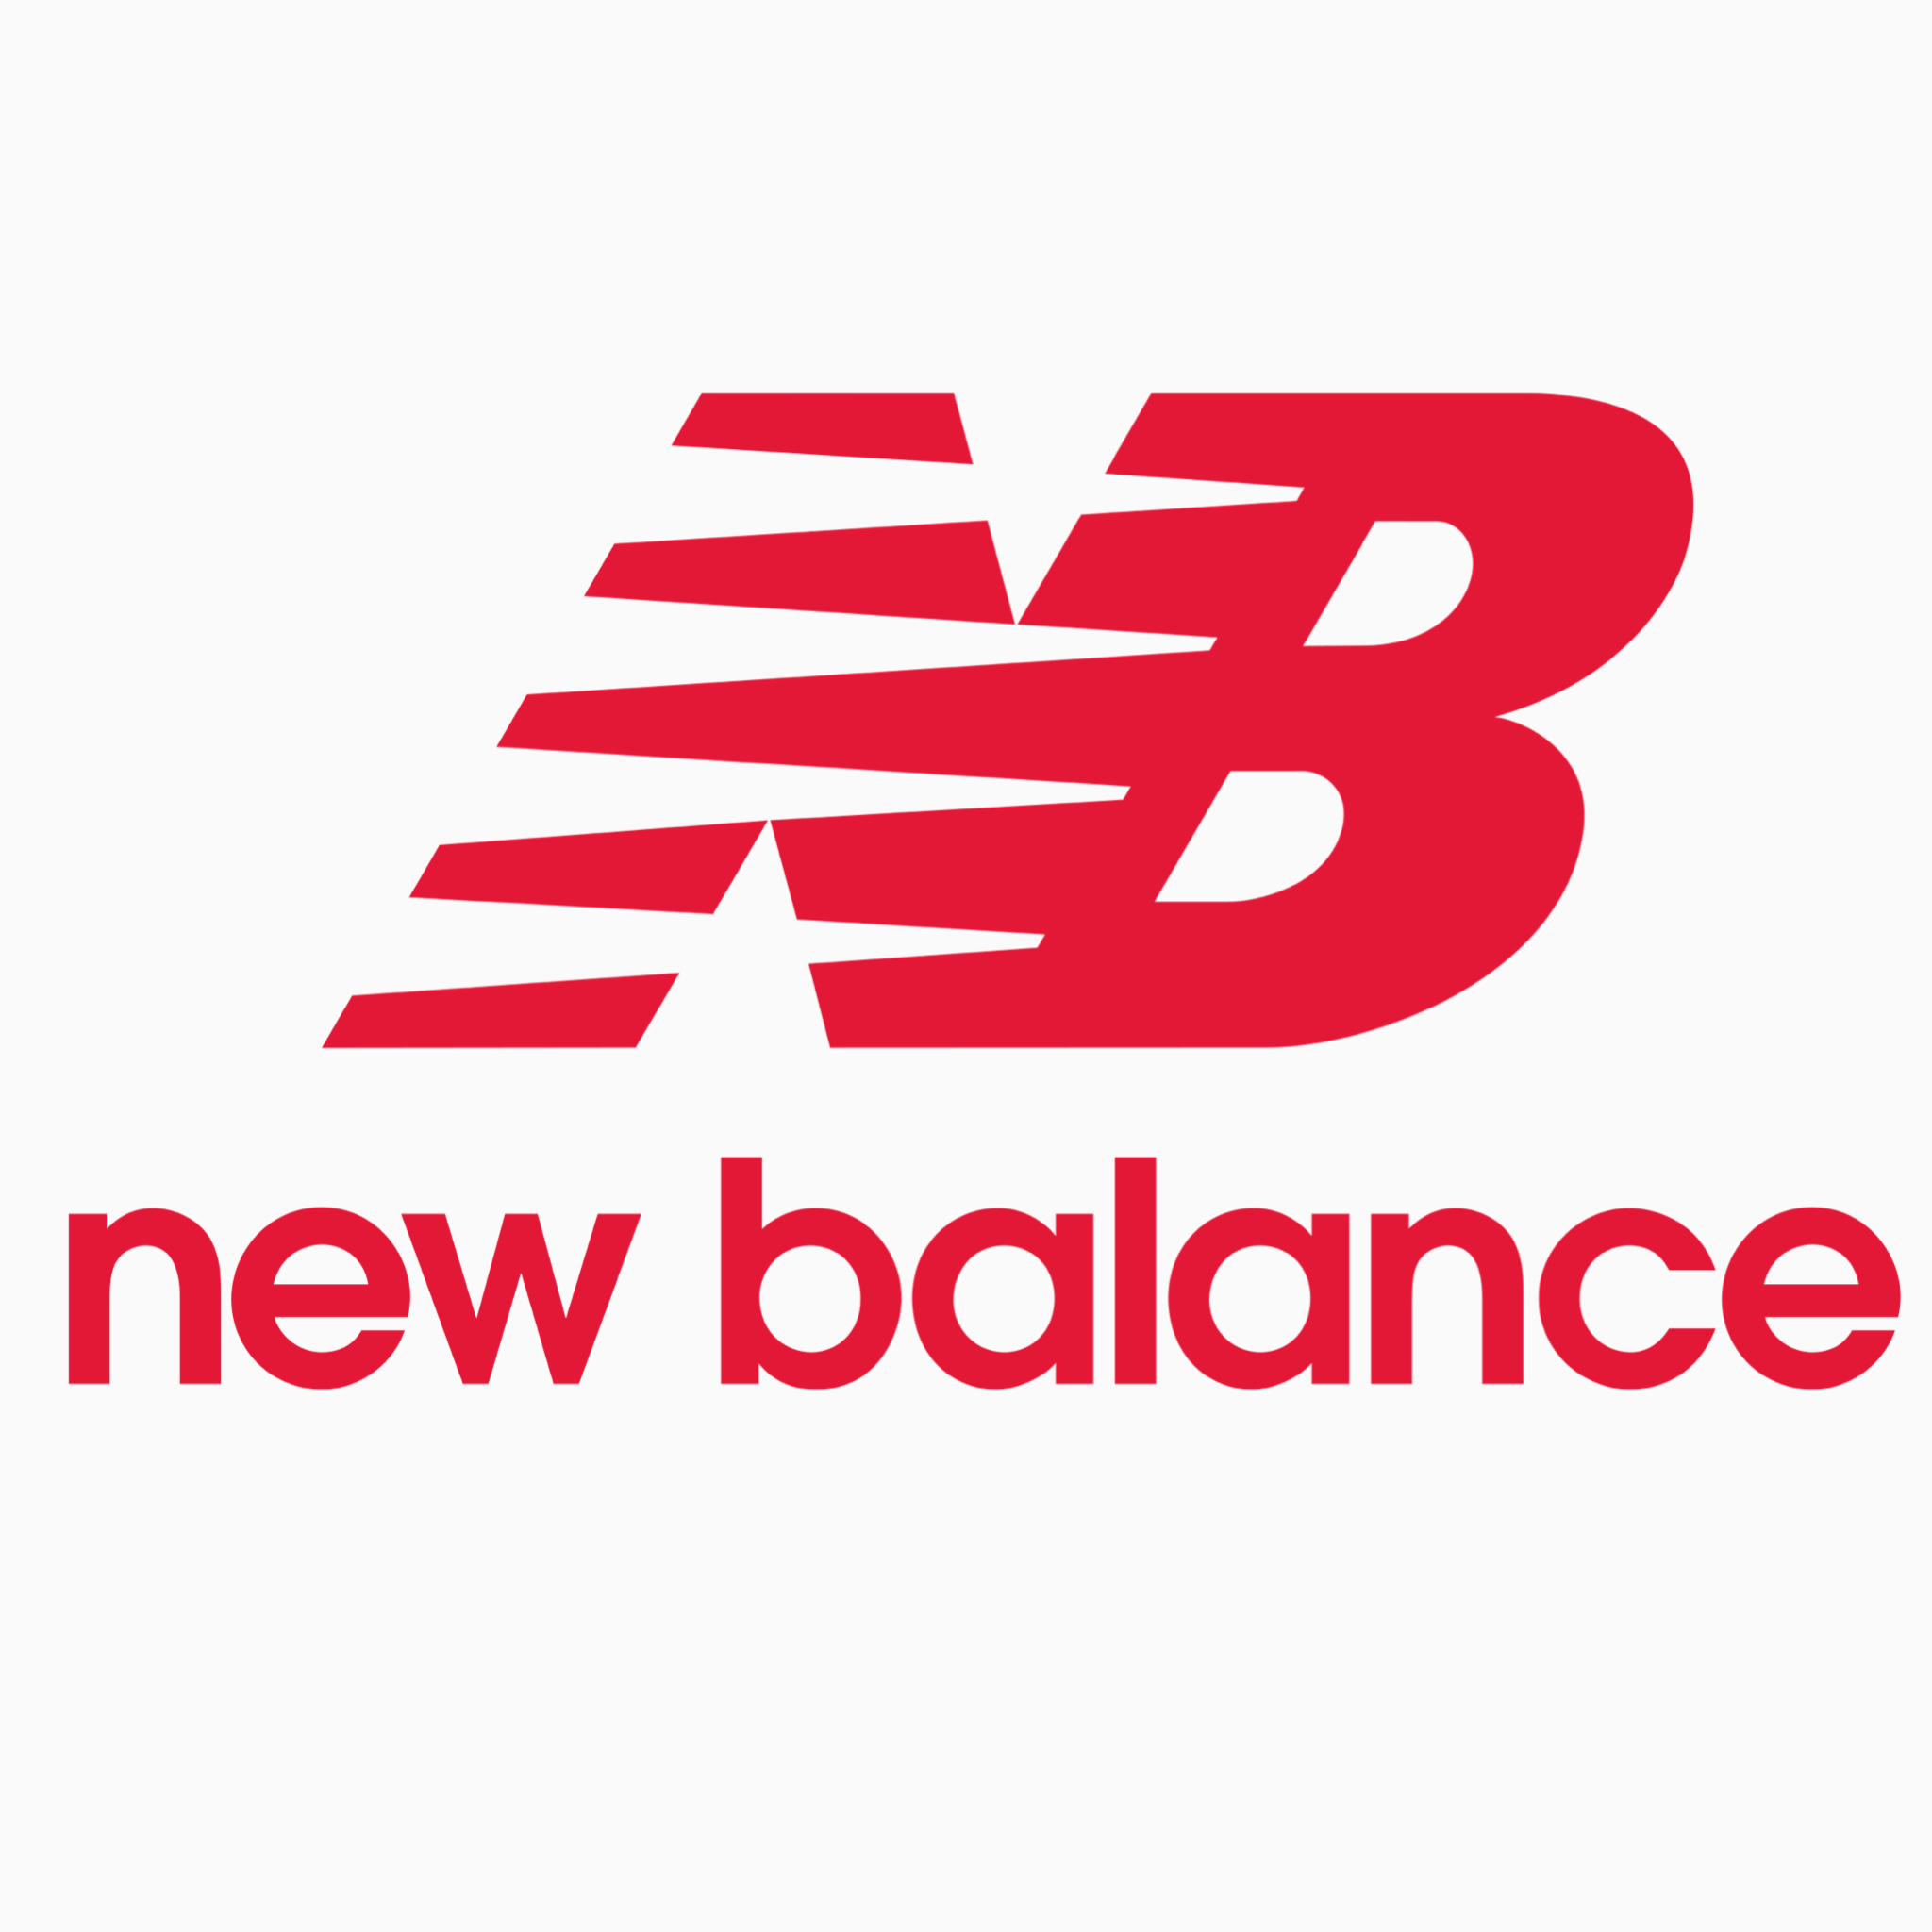 نيو بالانس | New balance